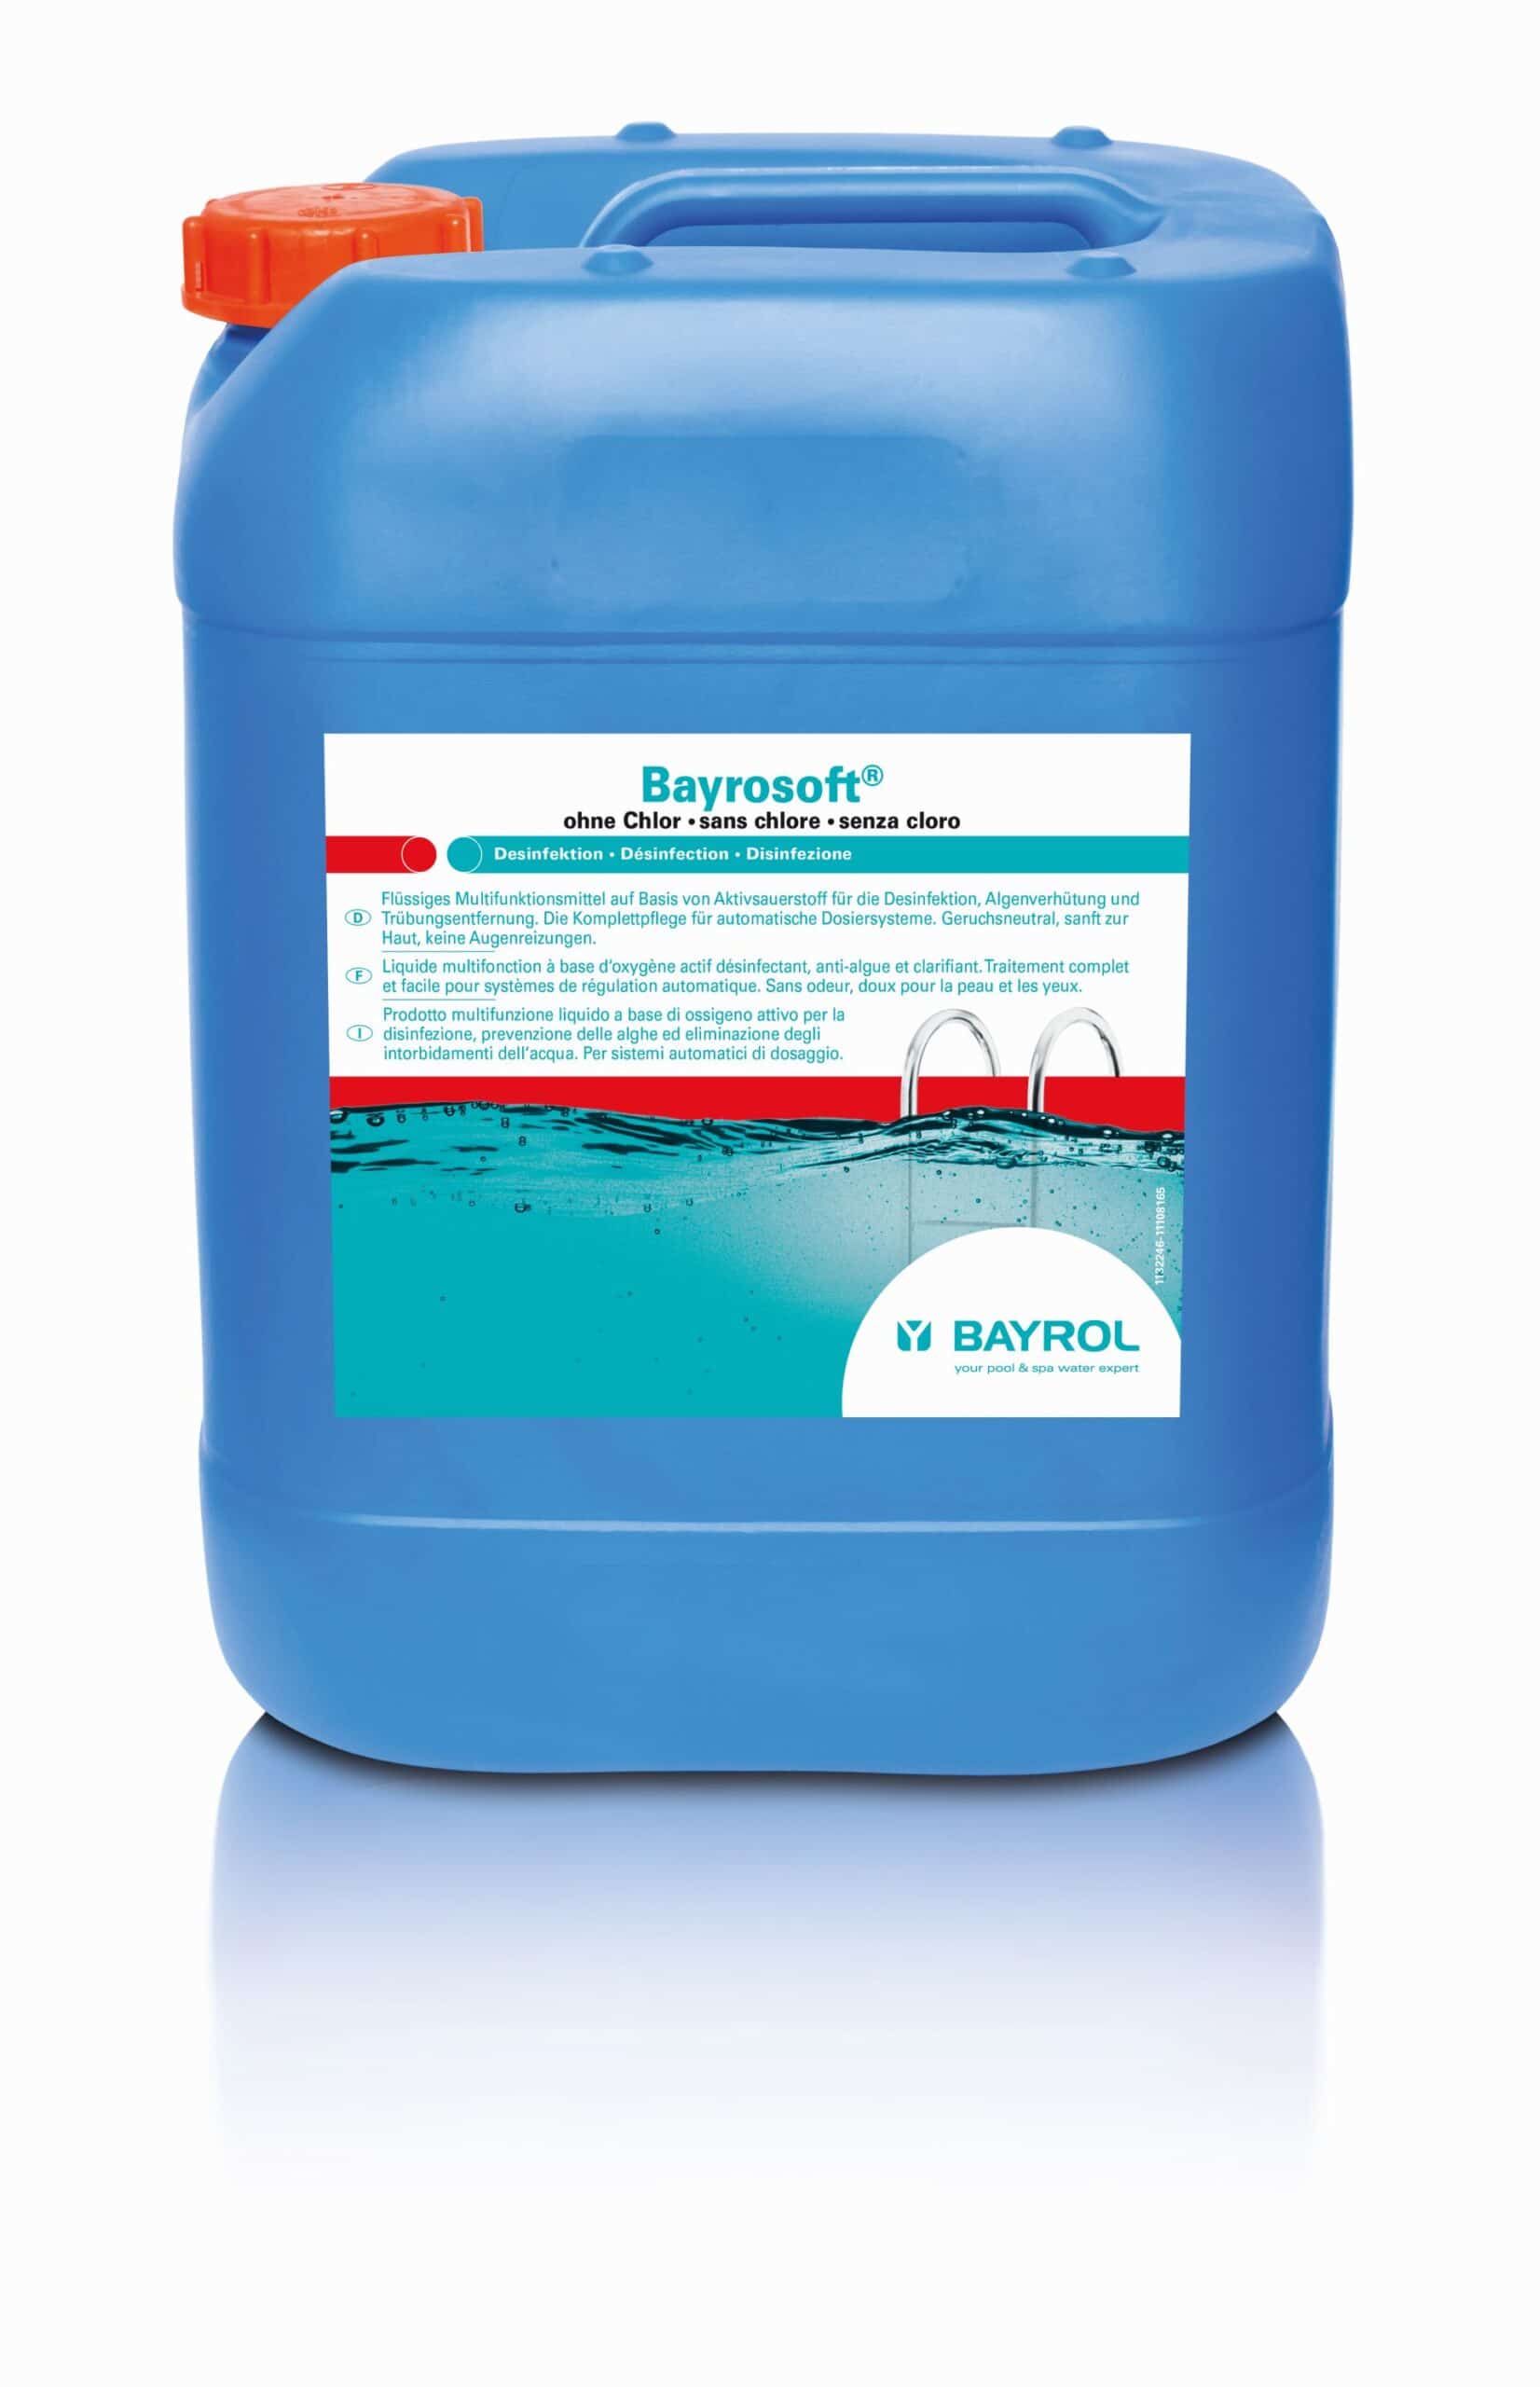 Bayrol Bayrosoft 22 kg - tlen do wody basenowej